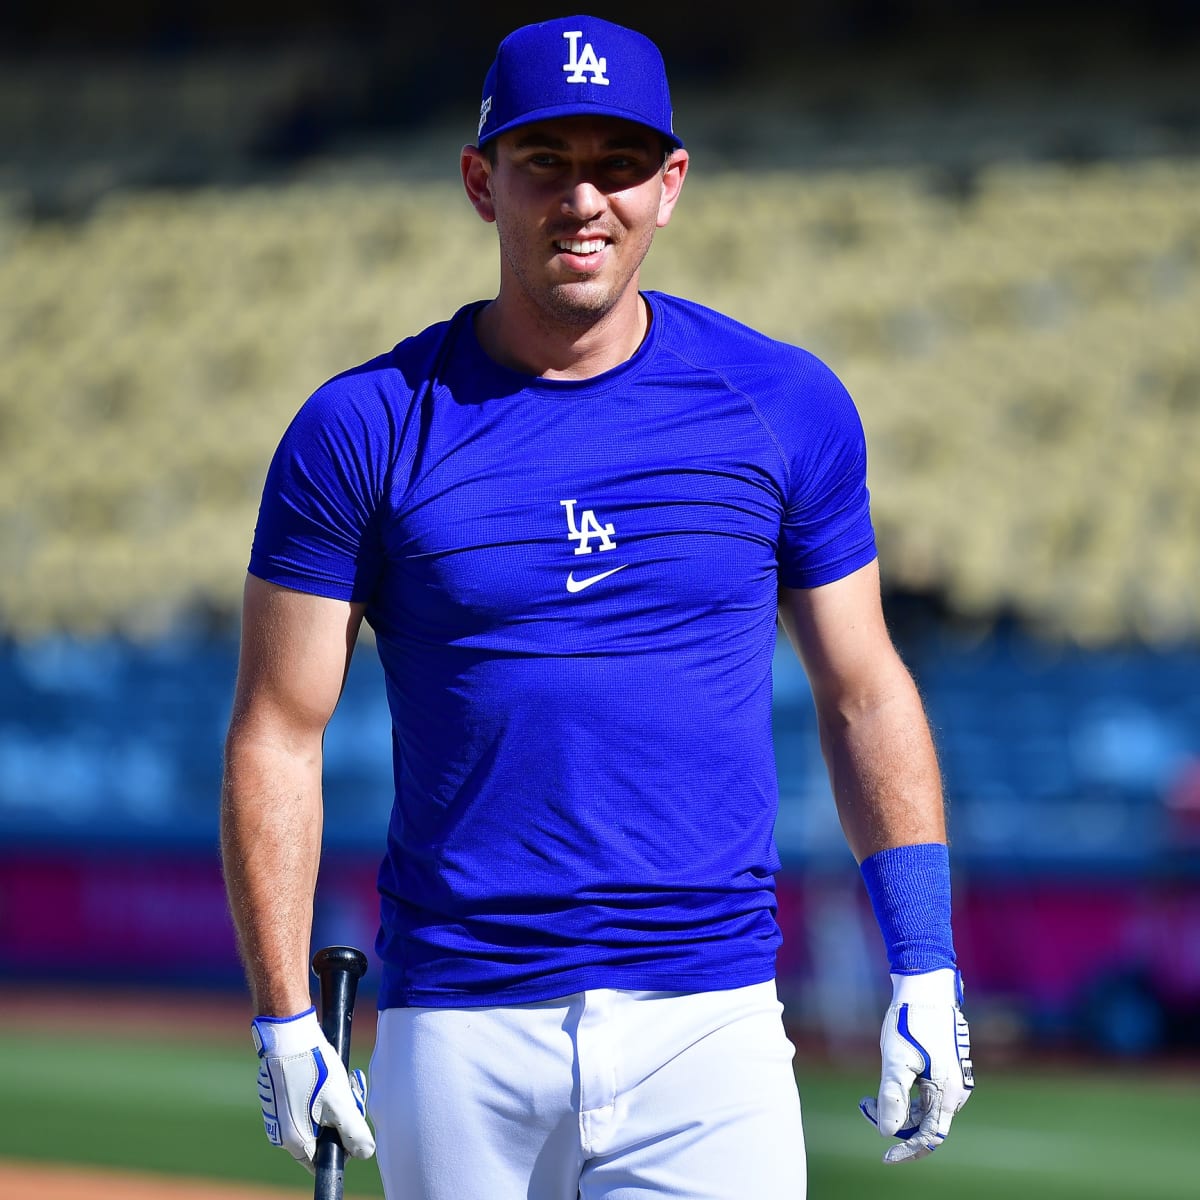 Official Austin Barnes L.A. Dodgers Jersey, Austin Barnes Shirts